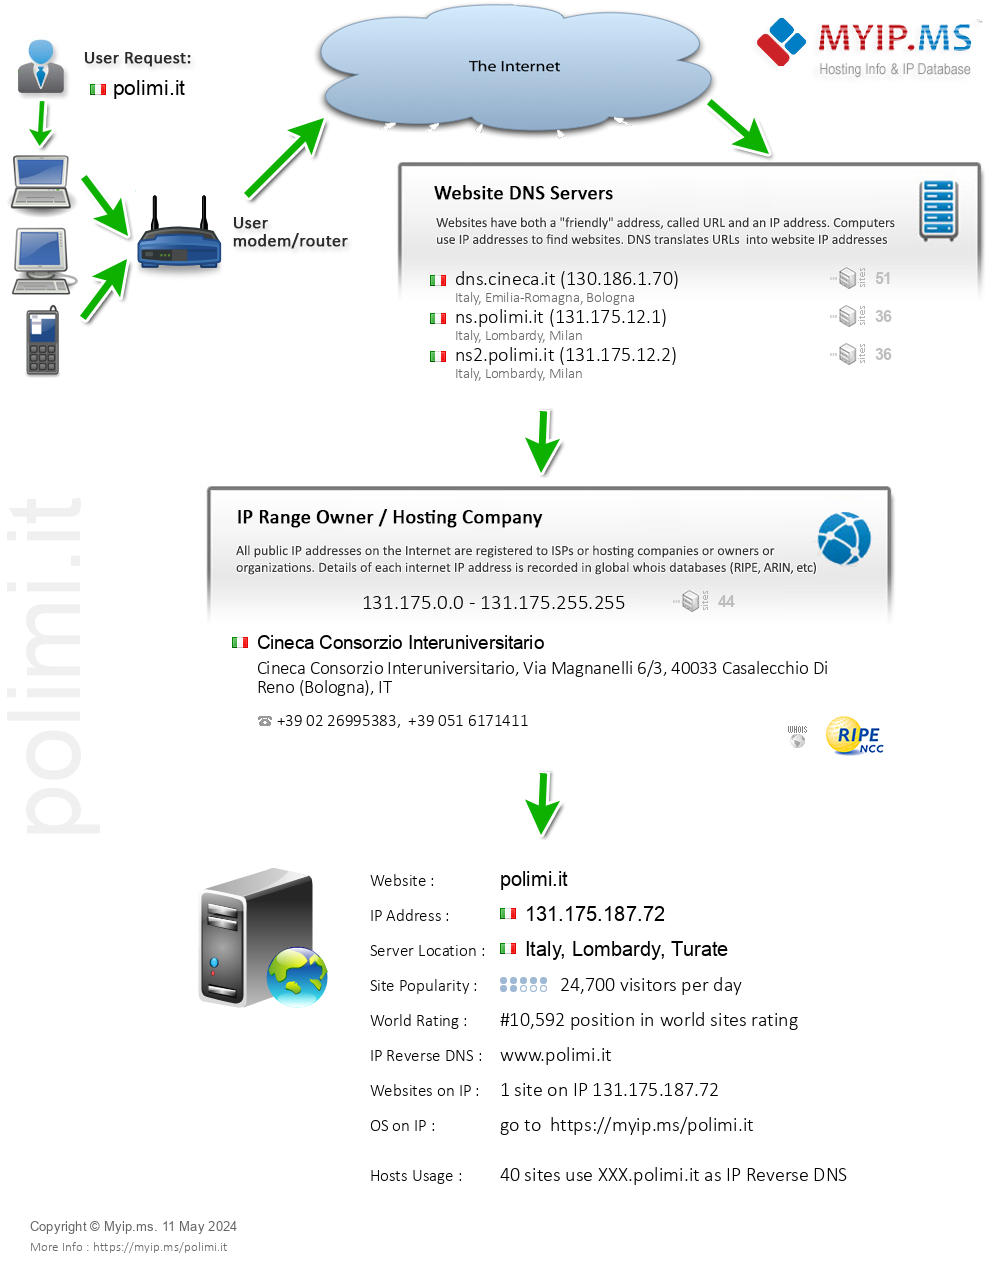 Polimi.it - Website Hosting Visual IP Diagram